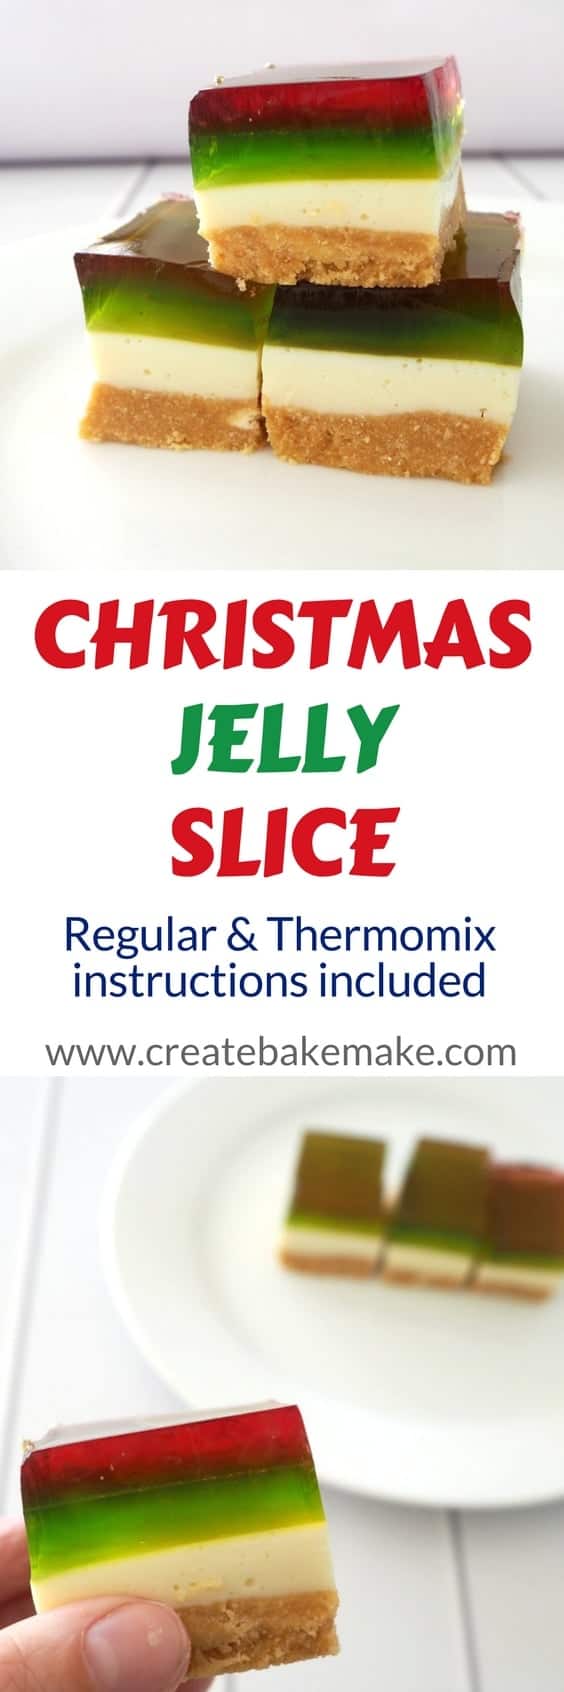 Christmas Jelly Slice Recipe